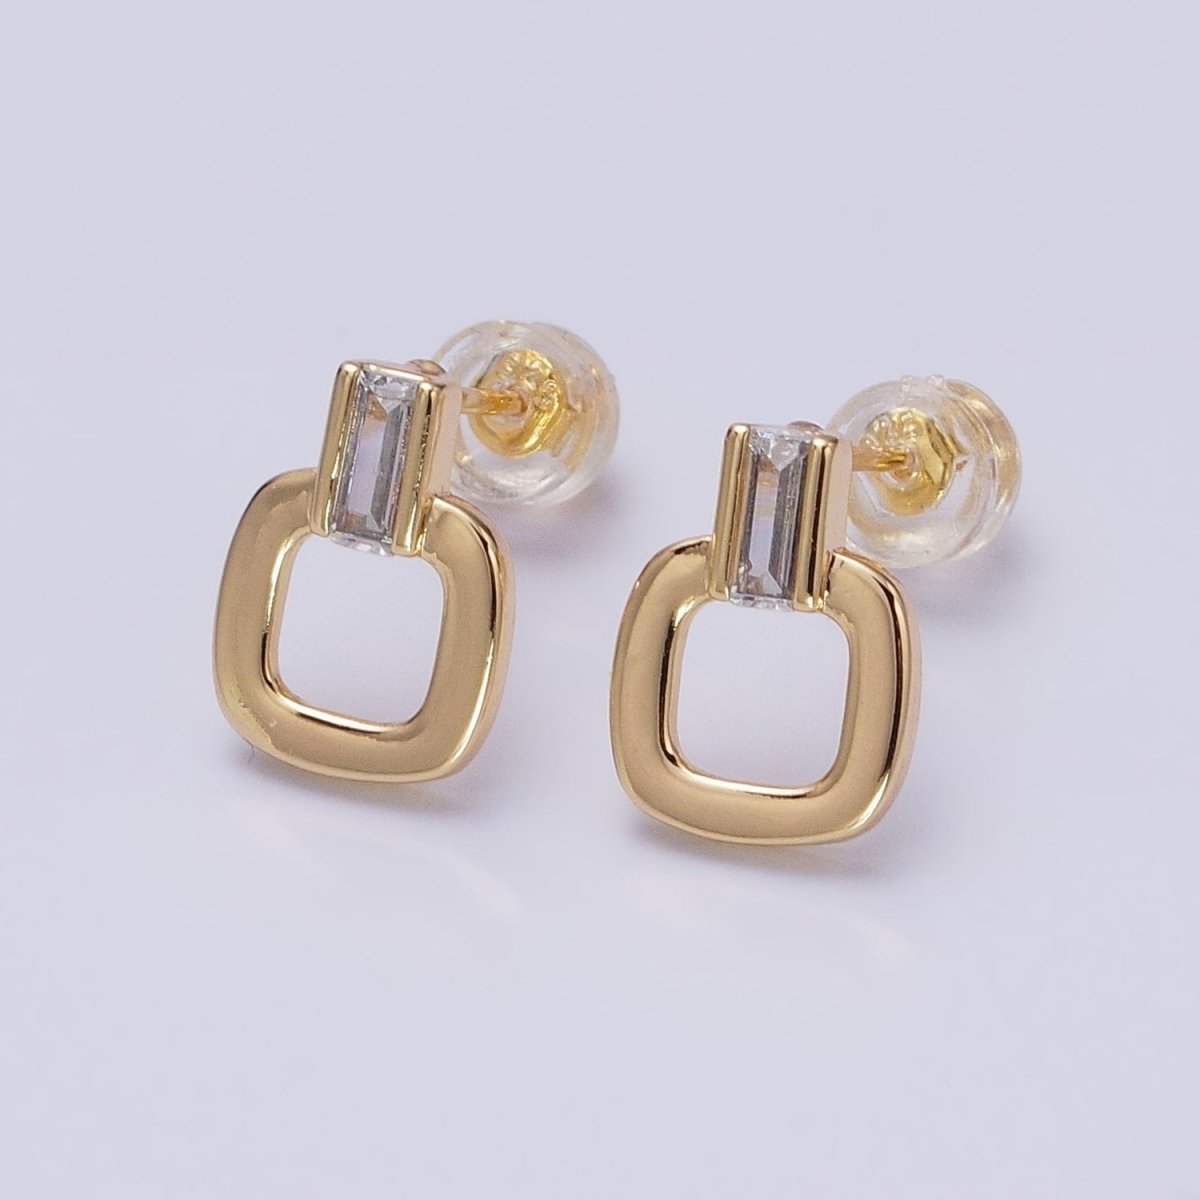 Minimalist Square Stud Earrings, Silver and Gold Modern Geometric Stud Earrings AB641 AB642 - DLUXCA